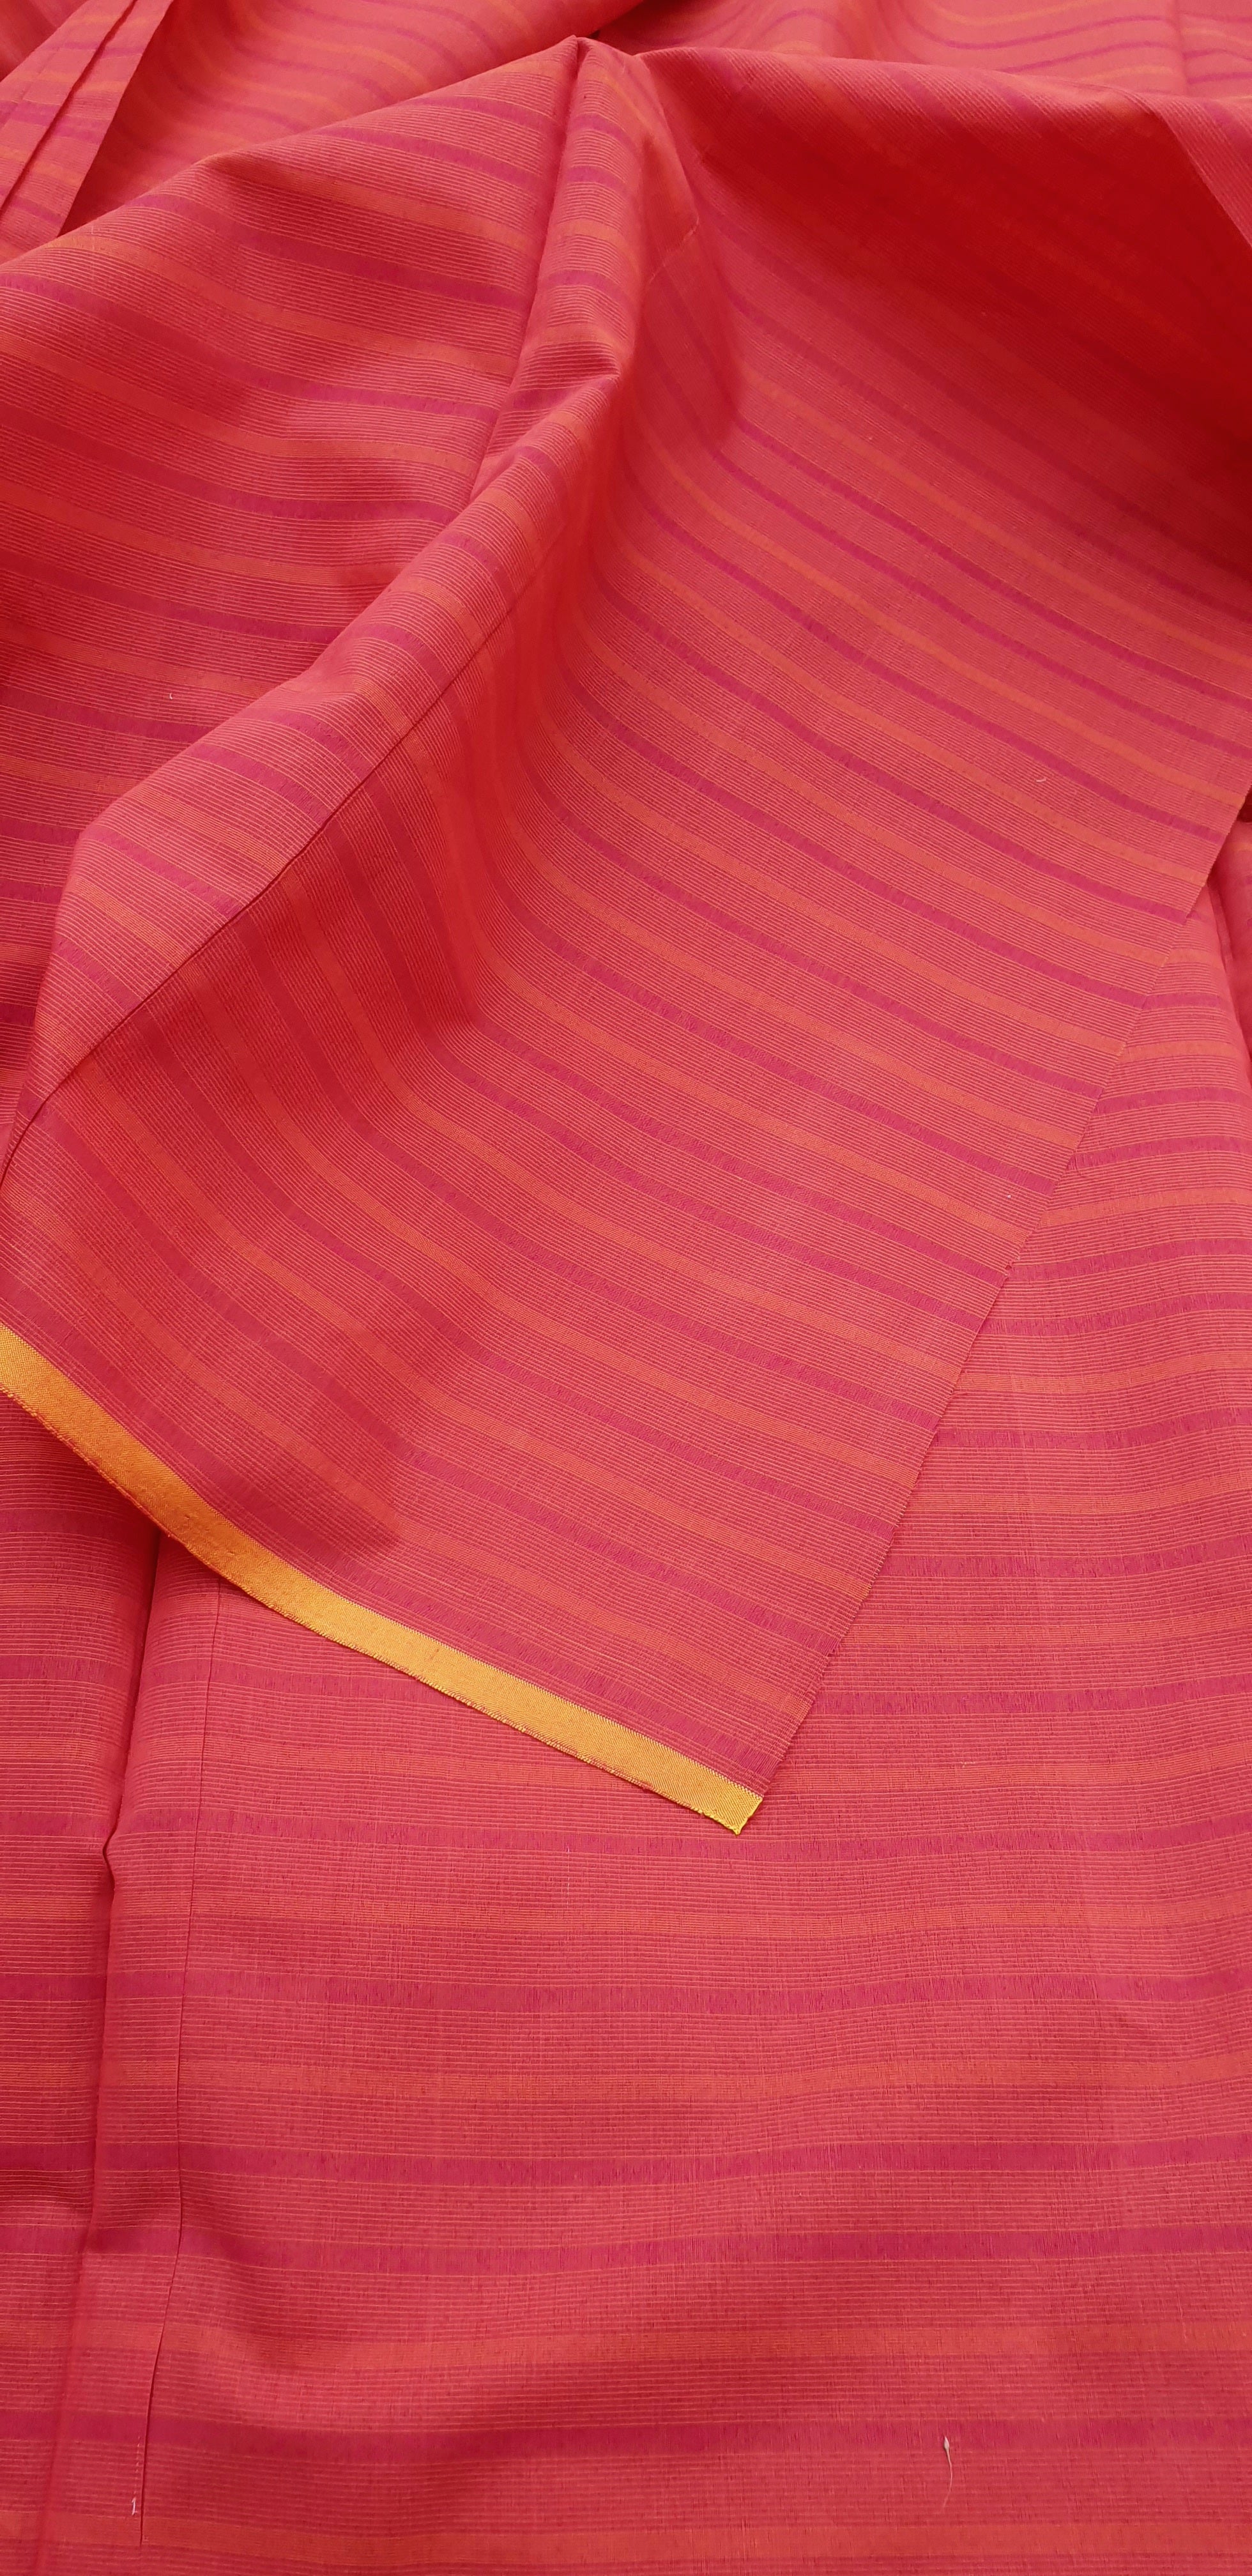 Fabric with Warp Stripes